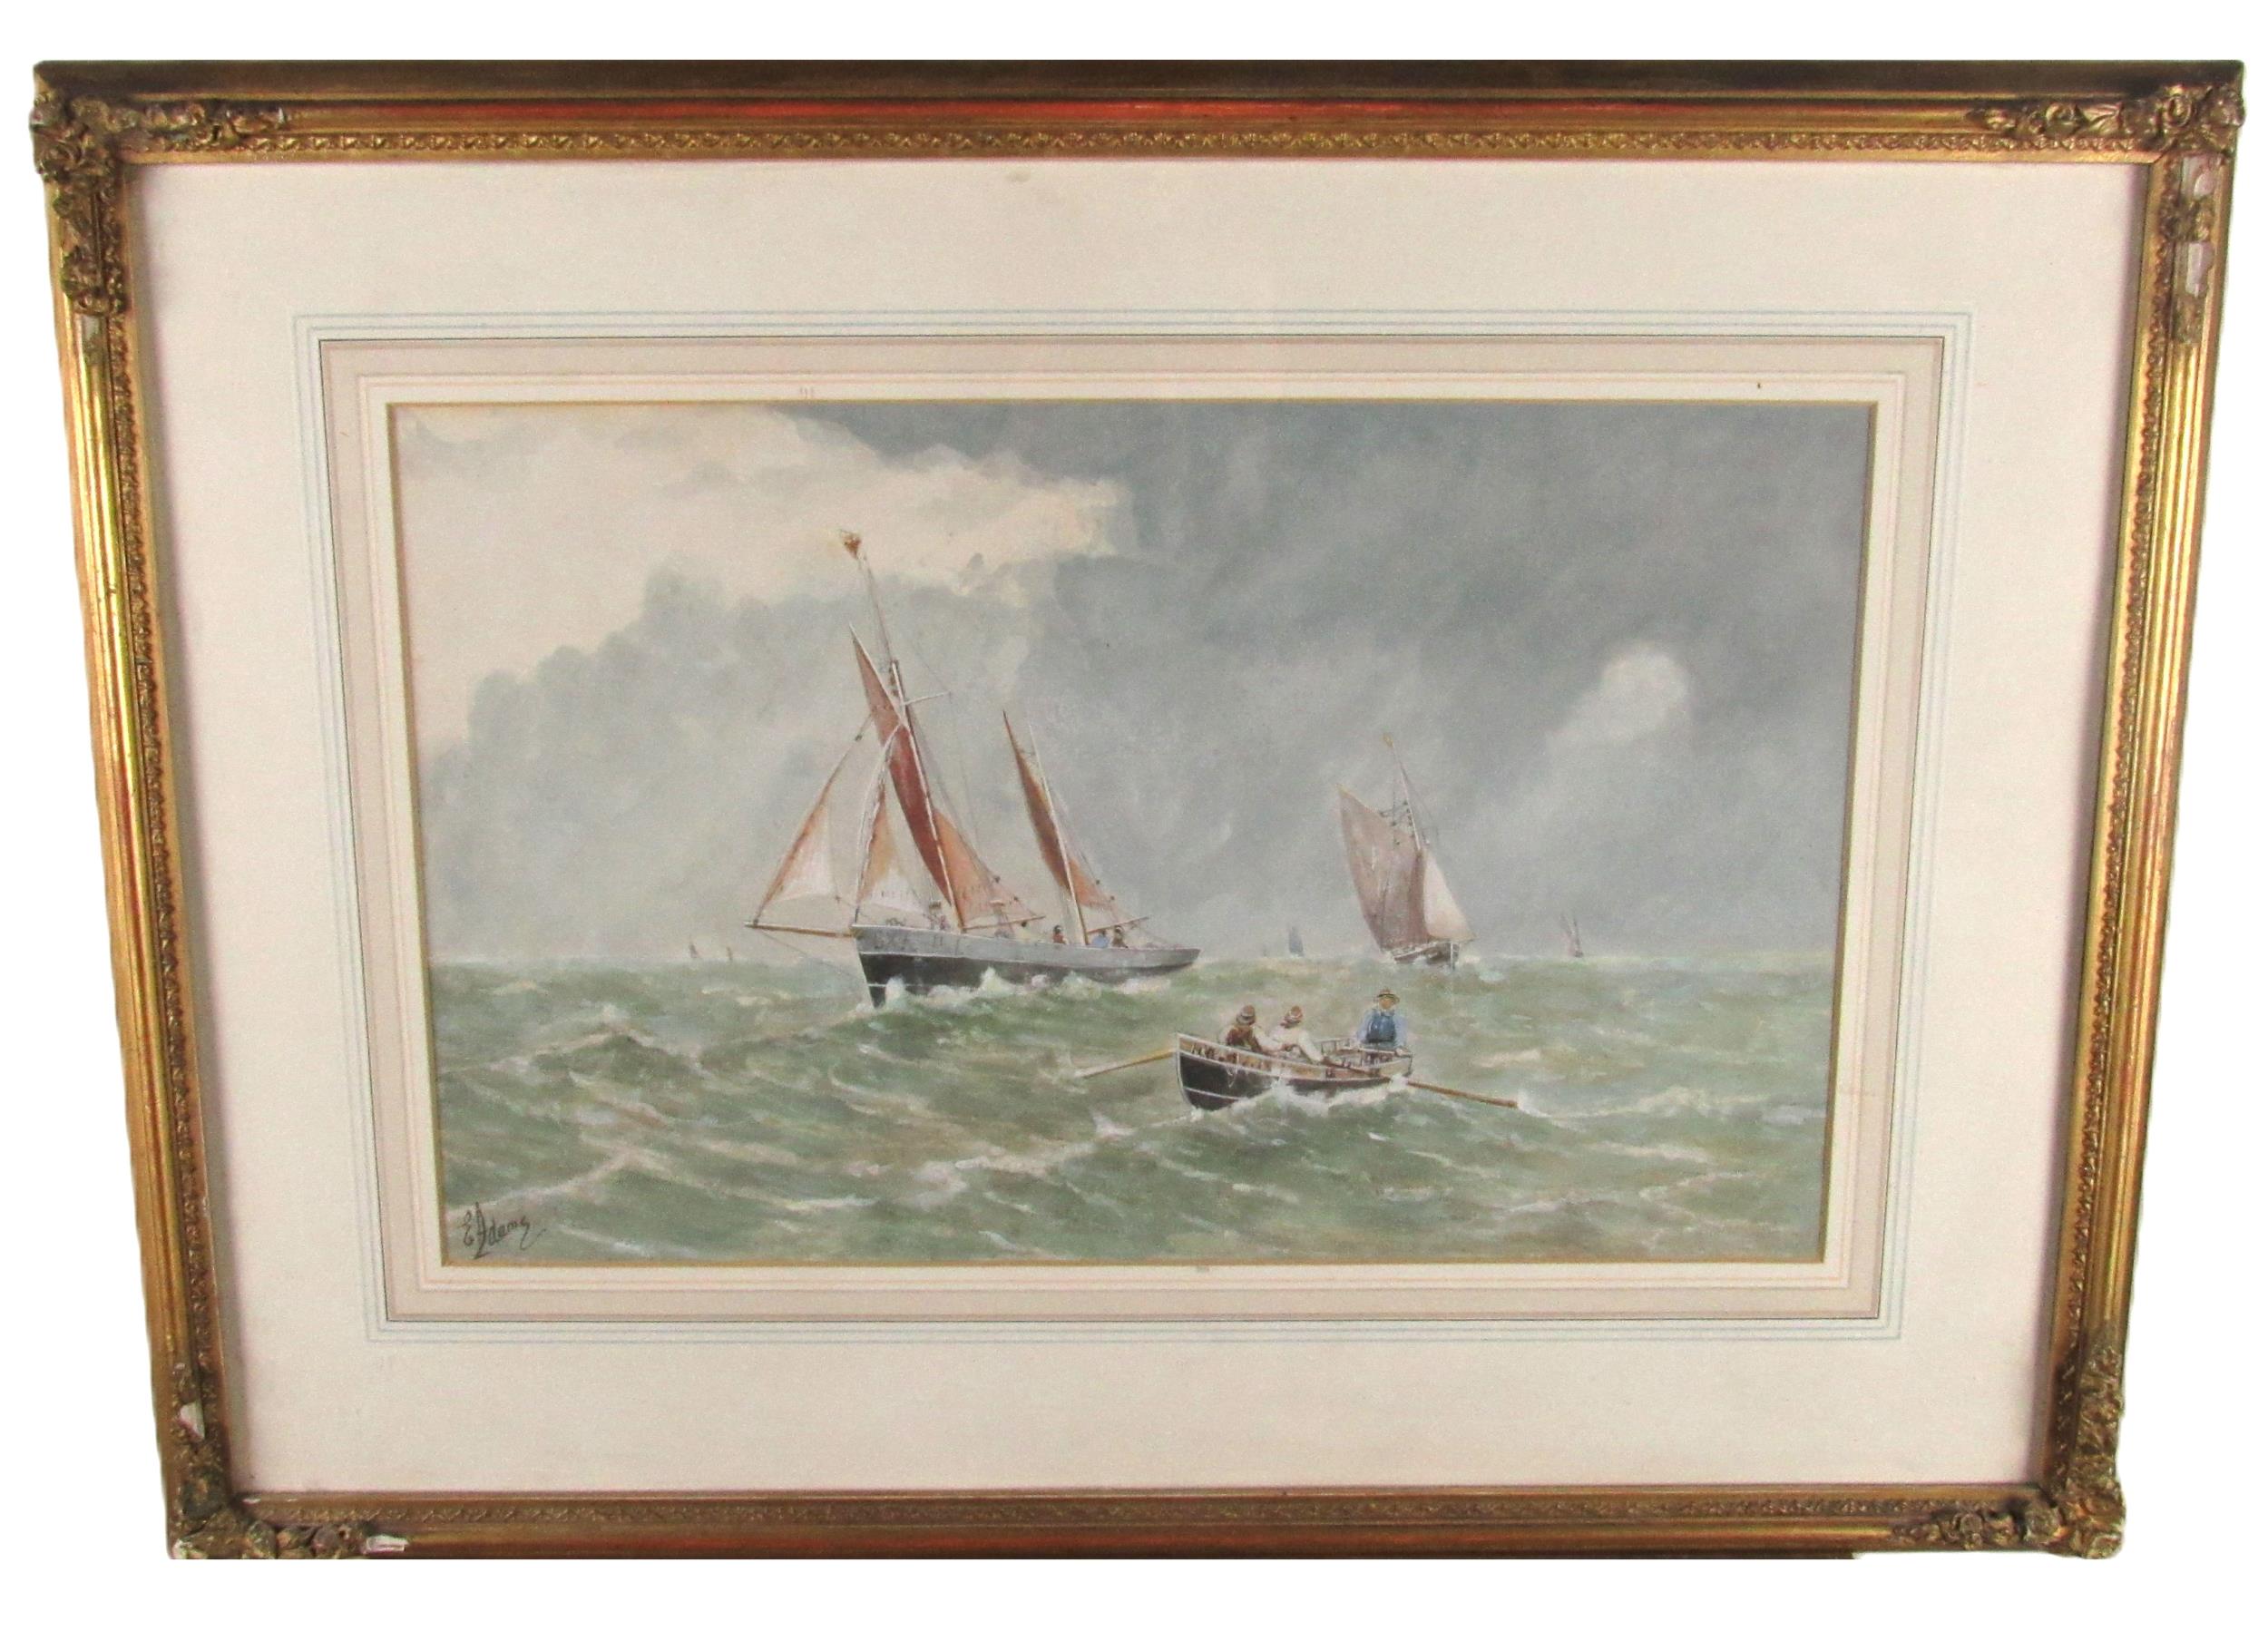 Edward Adams, British (XIX-XX) "The Fishing Fleet at Sea," watercolour, busy seascape, with